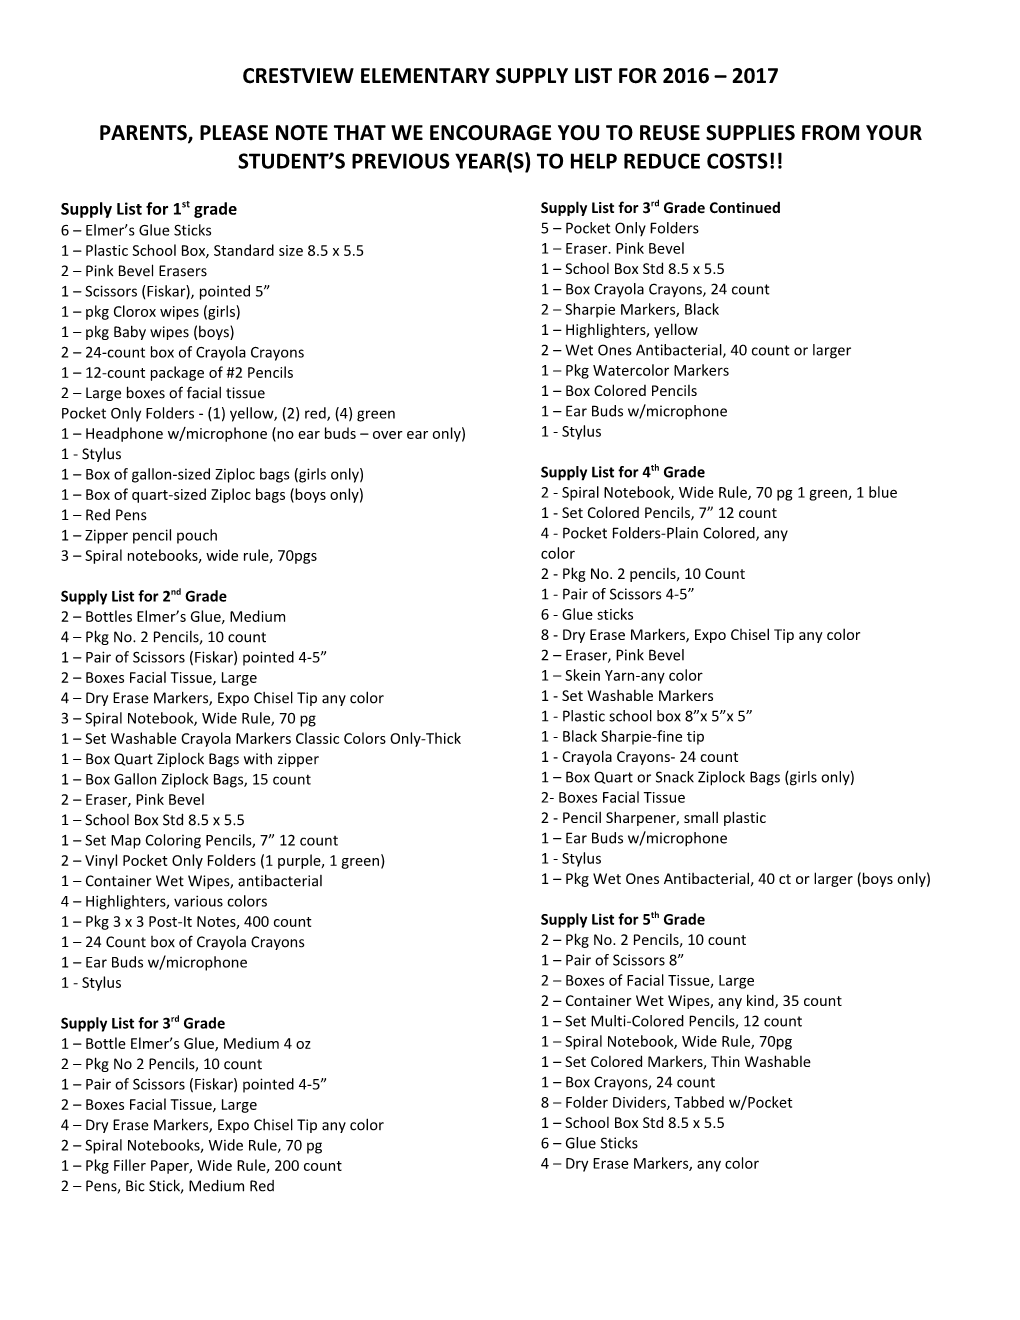 Crestview Elementary Supply List for 2016 2017